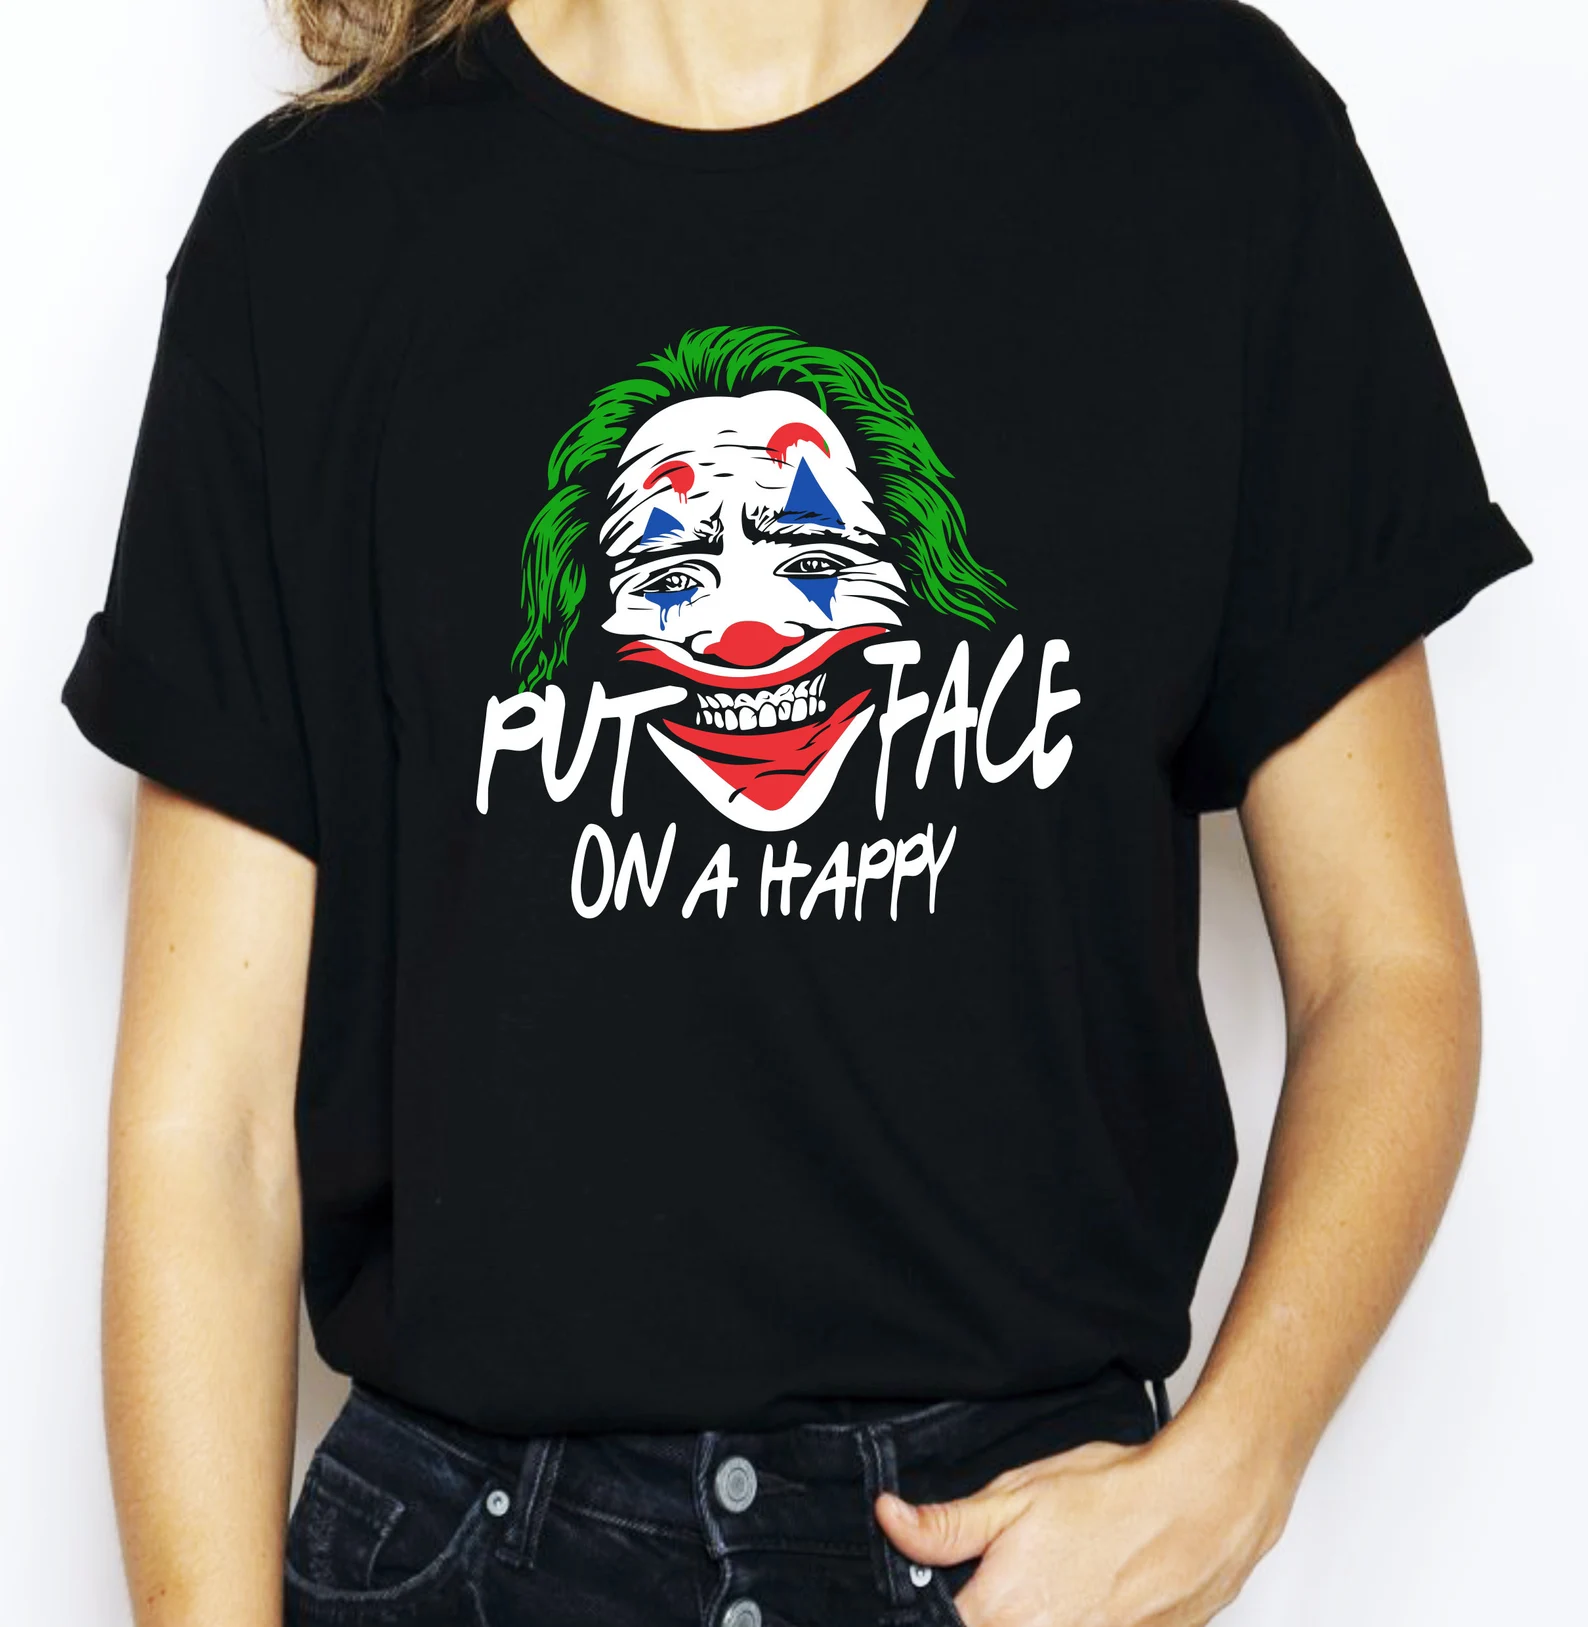 Classic black t-shirt with Joker face.